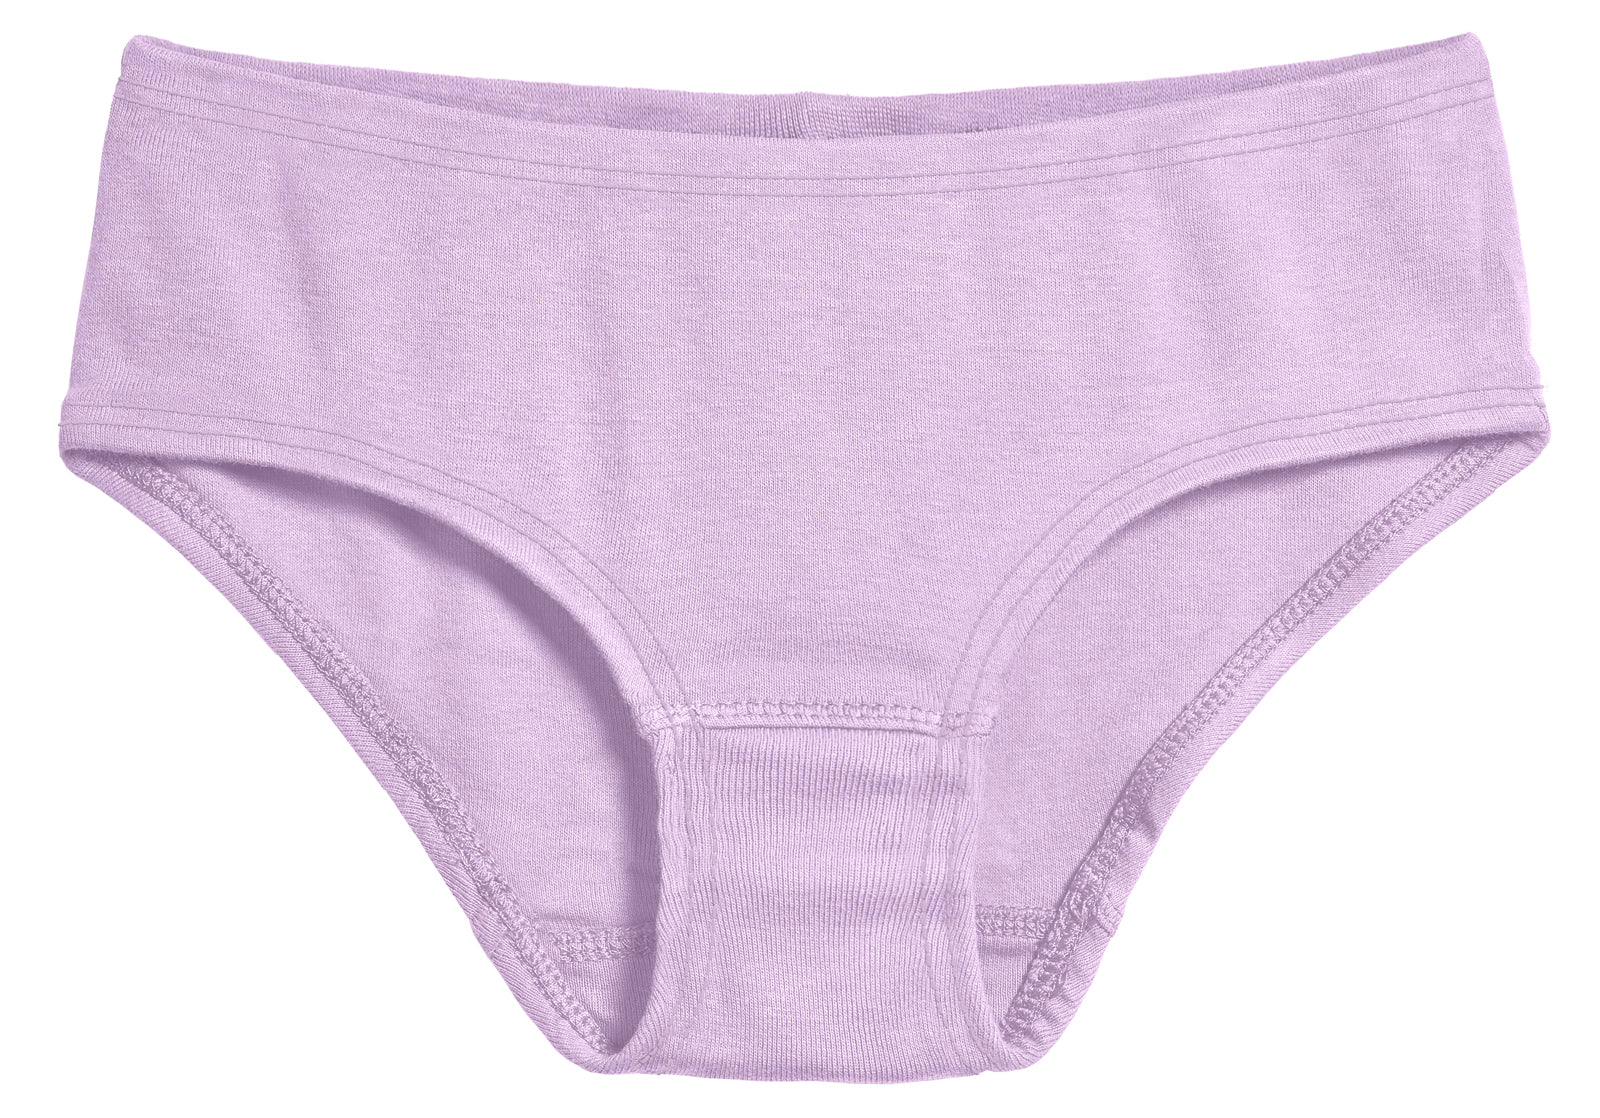 Five Colors Plain Soft Breathable Cotton Young Girls Underwear